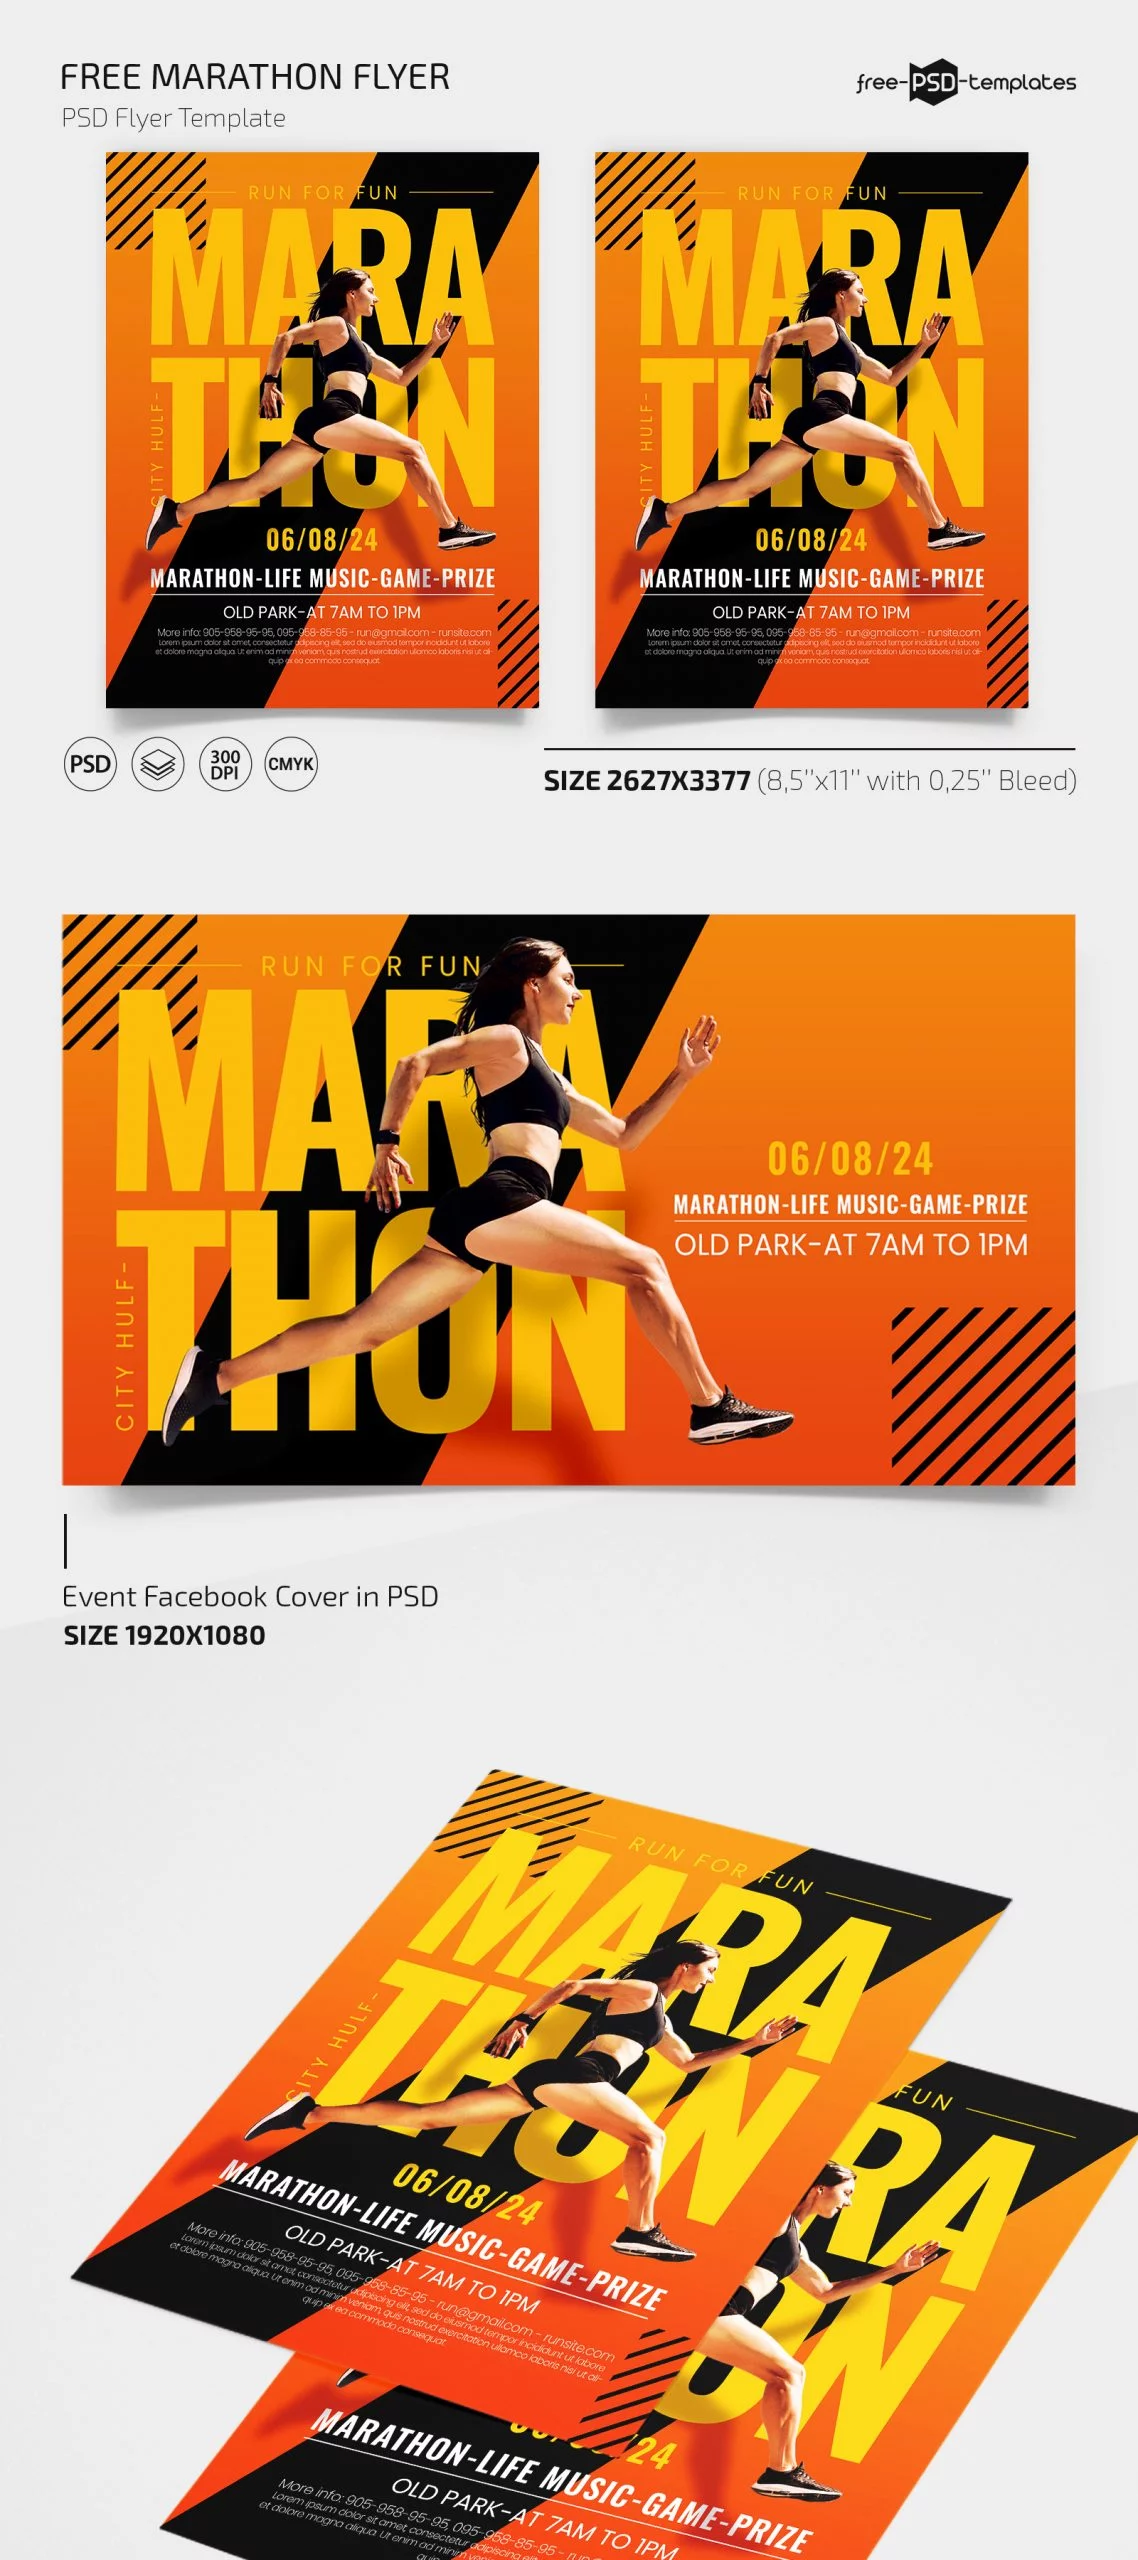 Free Marathon Flyer PSD Template